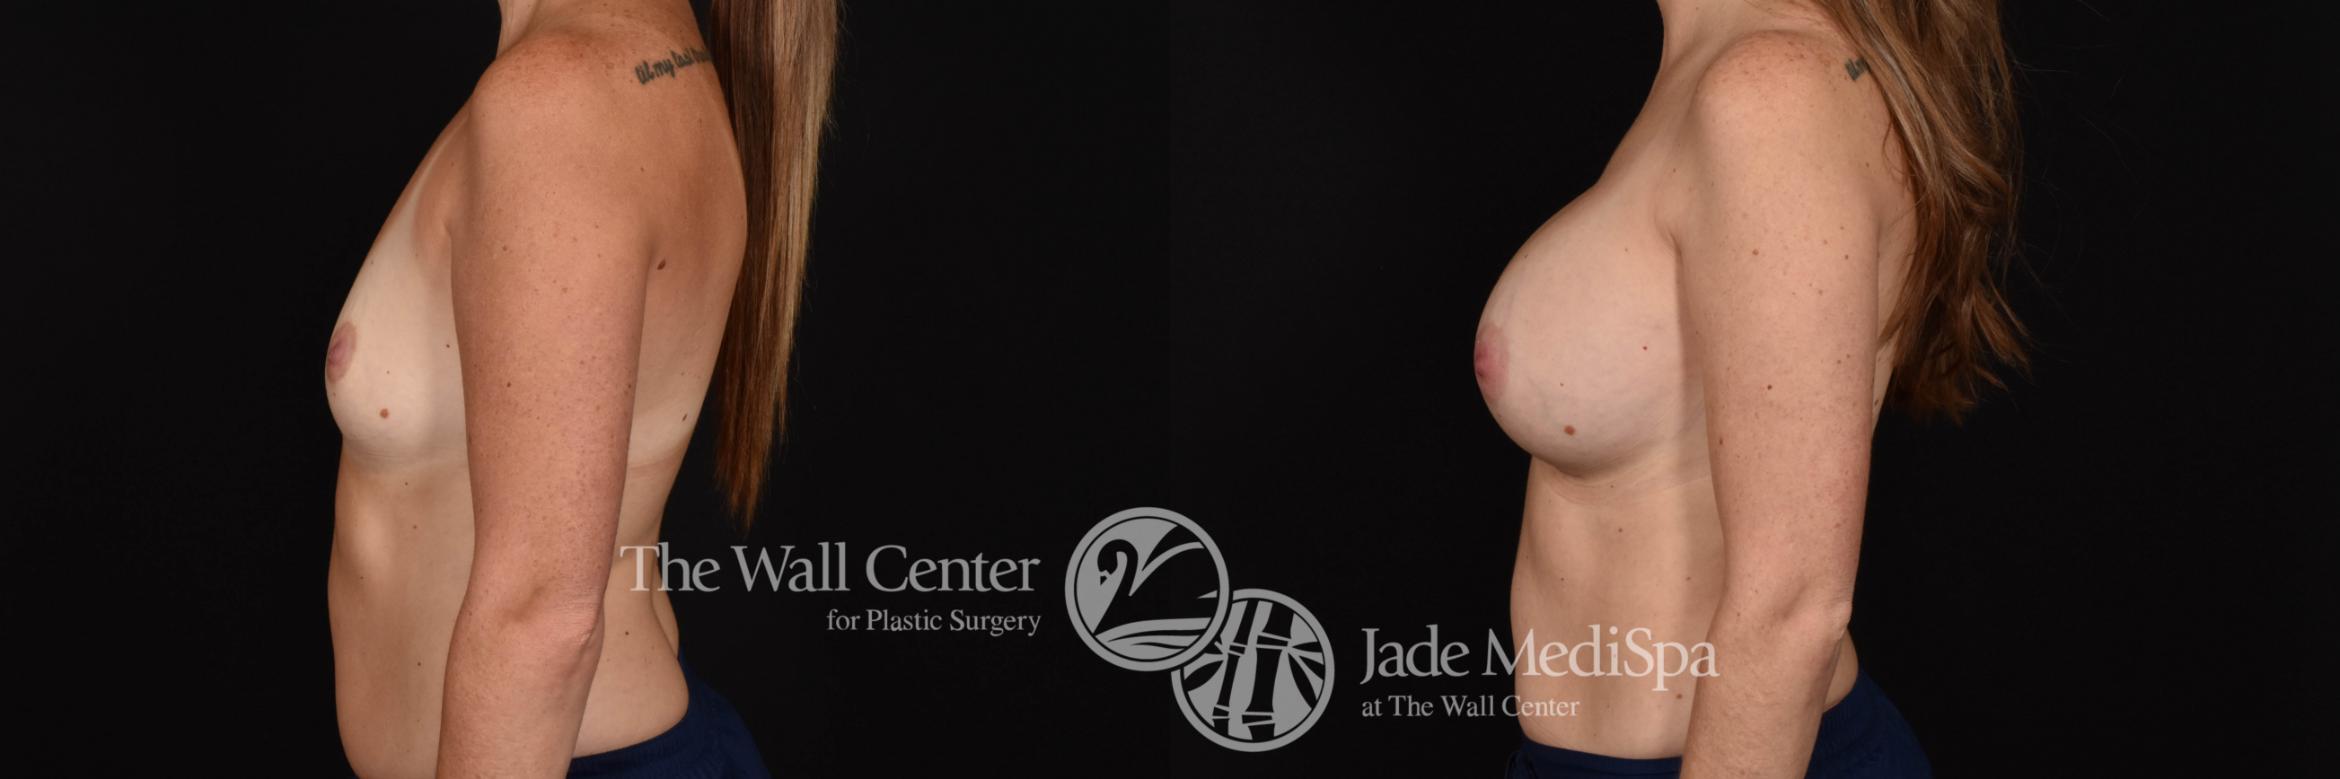 Breast Augmentation Left Side Photo, Shreveport, Louisiana, The Wall Center for Plastic Surgery, Case 815